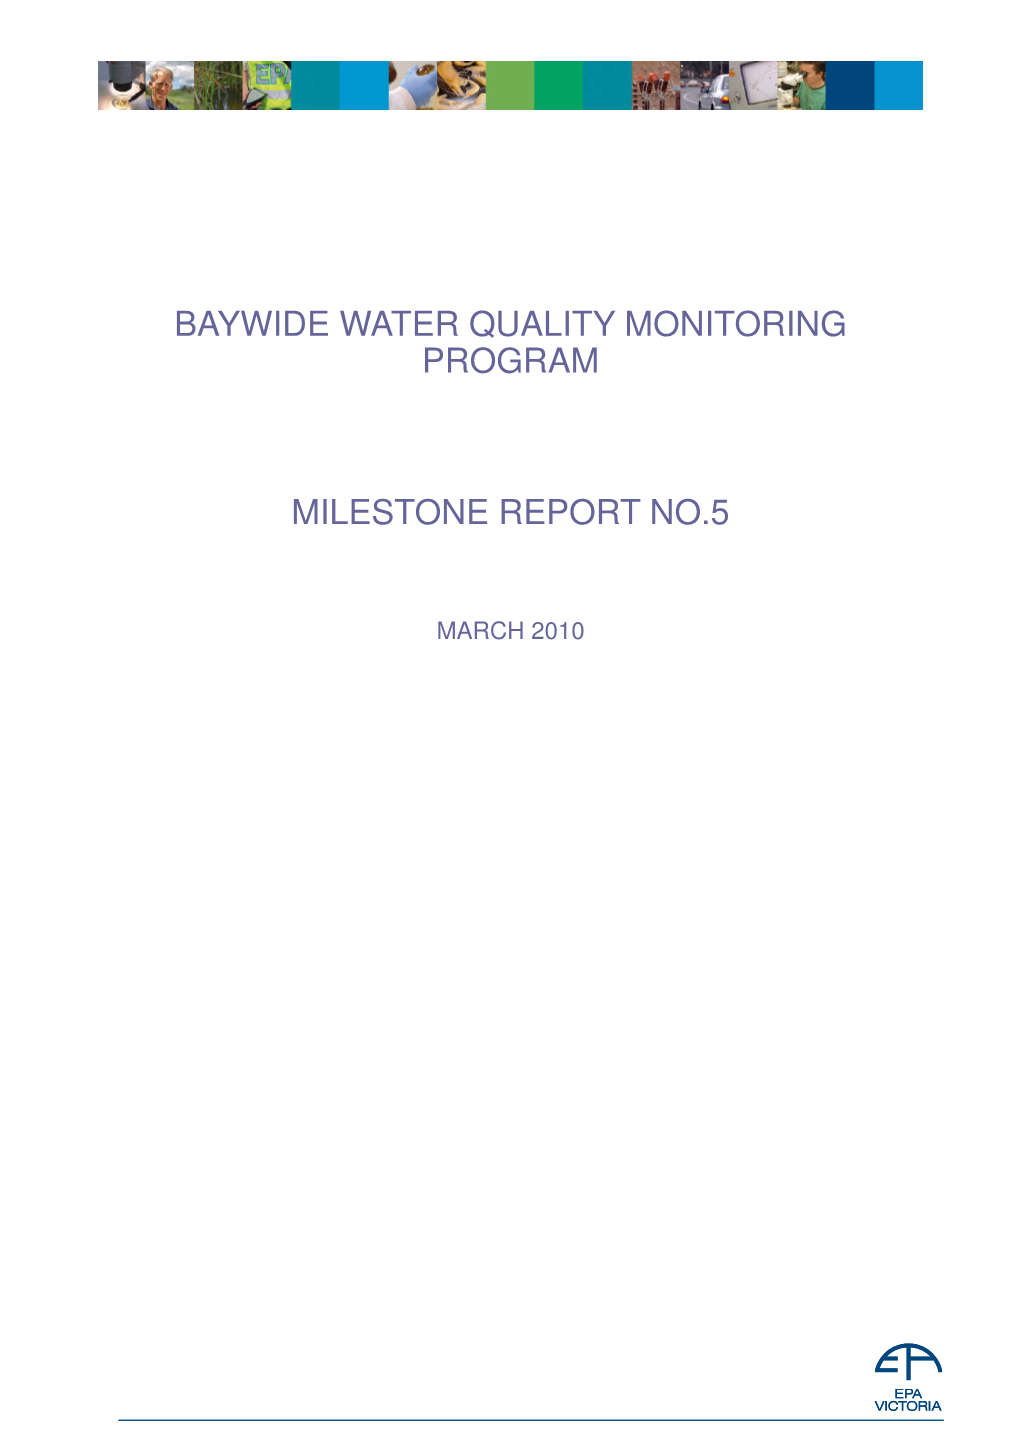 Baywide Water Quality Monitoring Program Milestone Report No.5